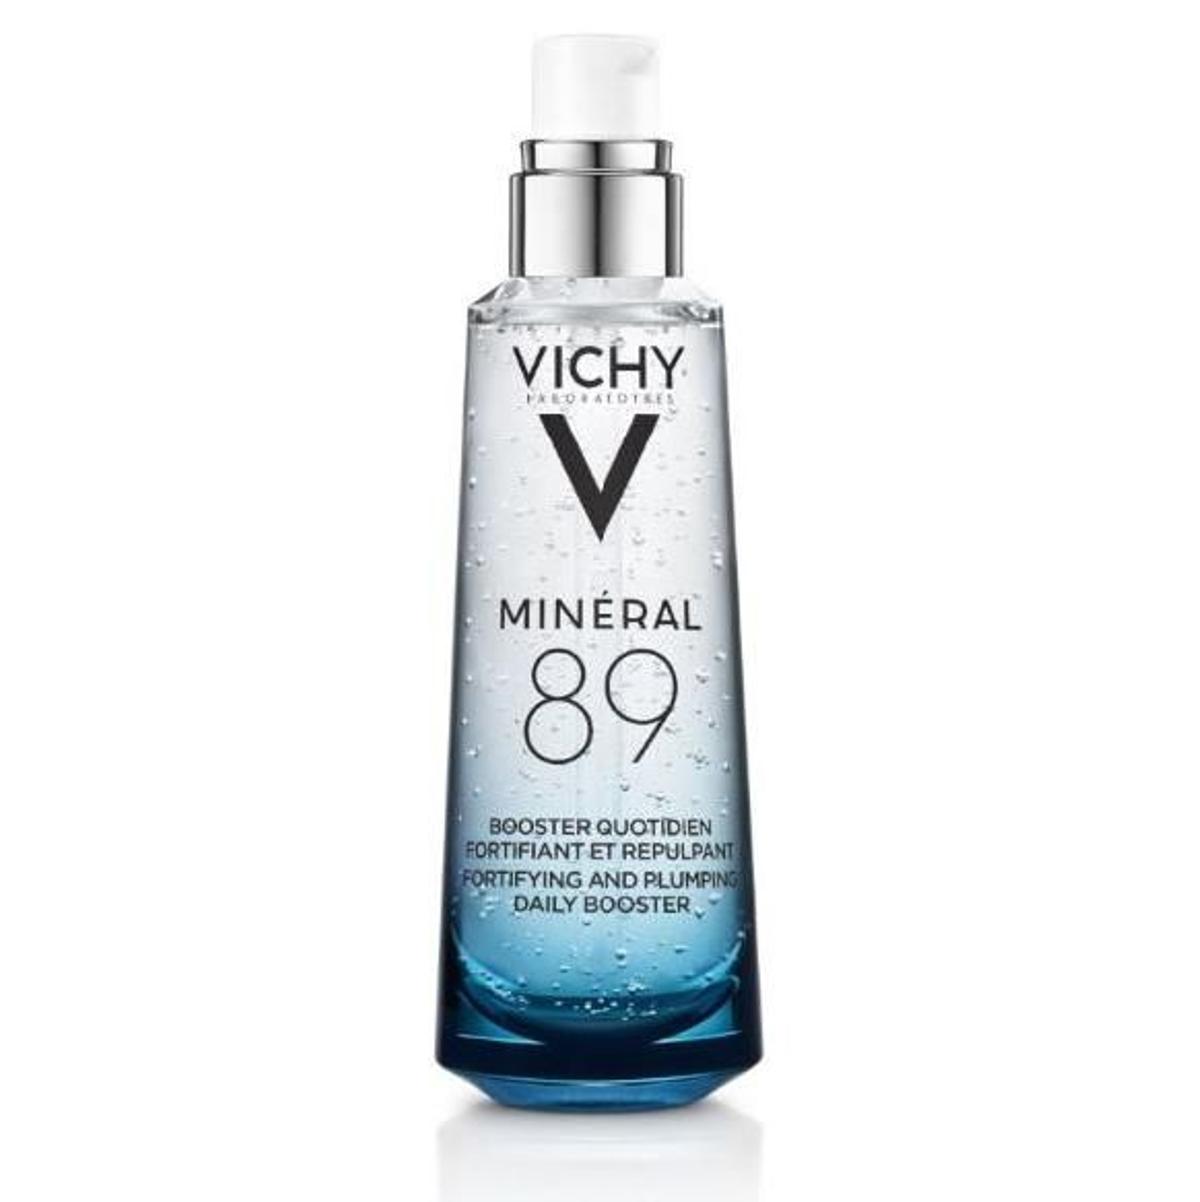 Mineral 89 Vichy